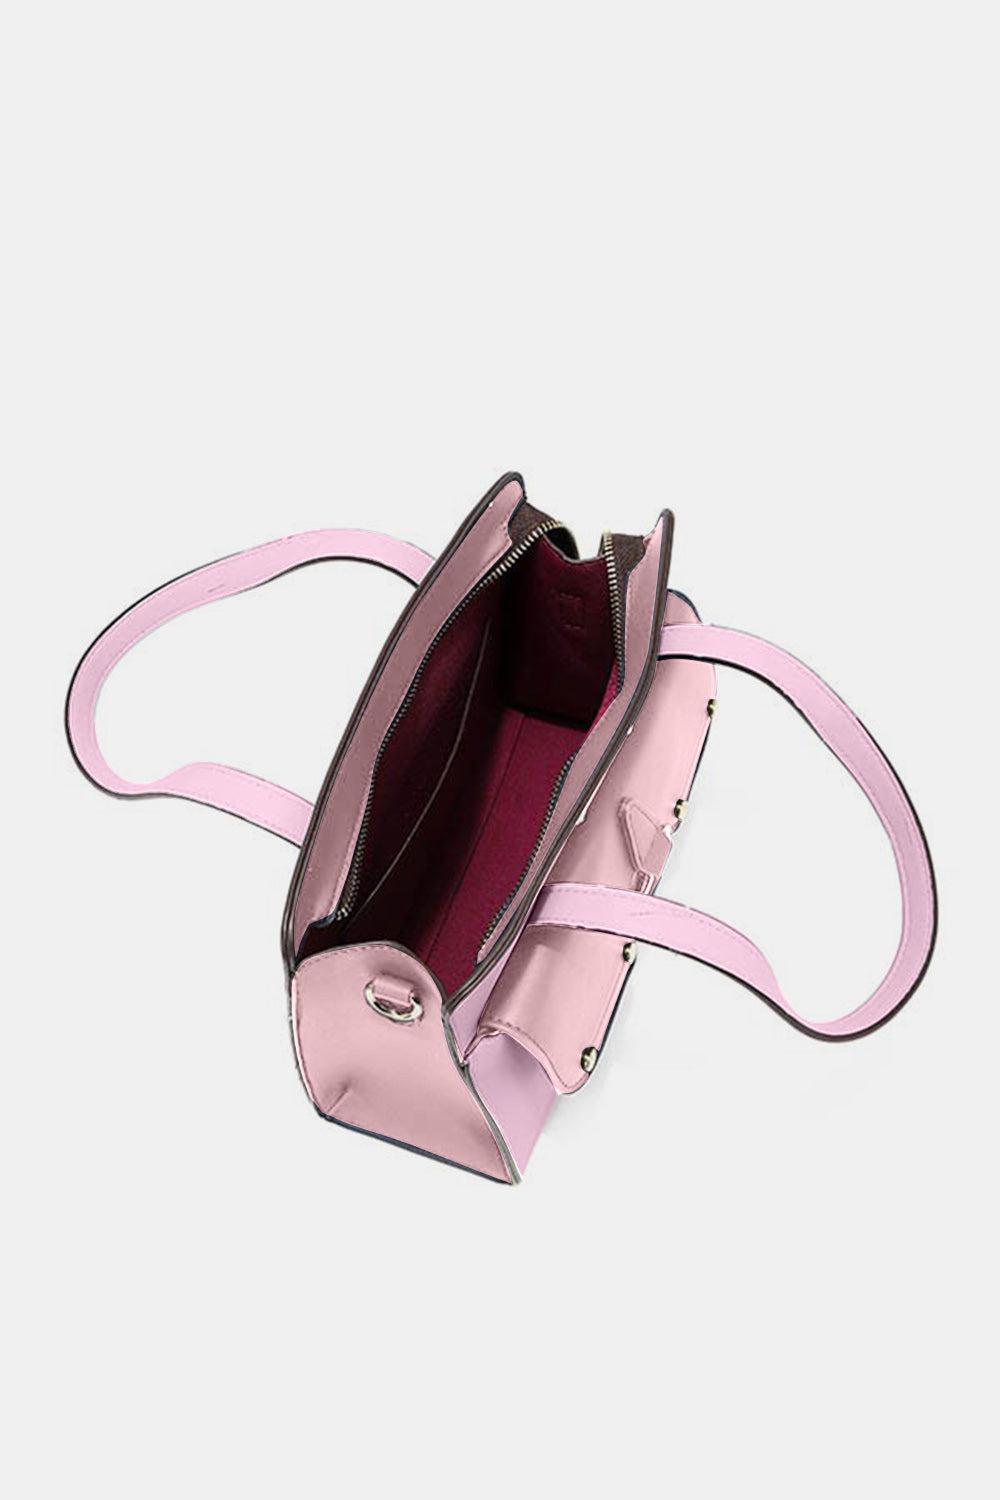 a pink handbag with a pink strap